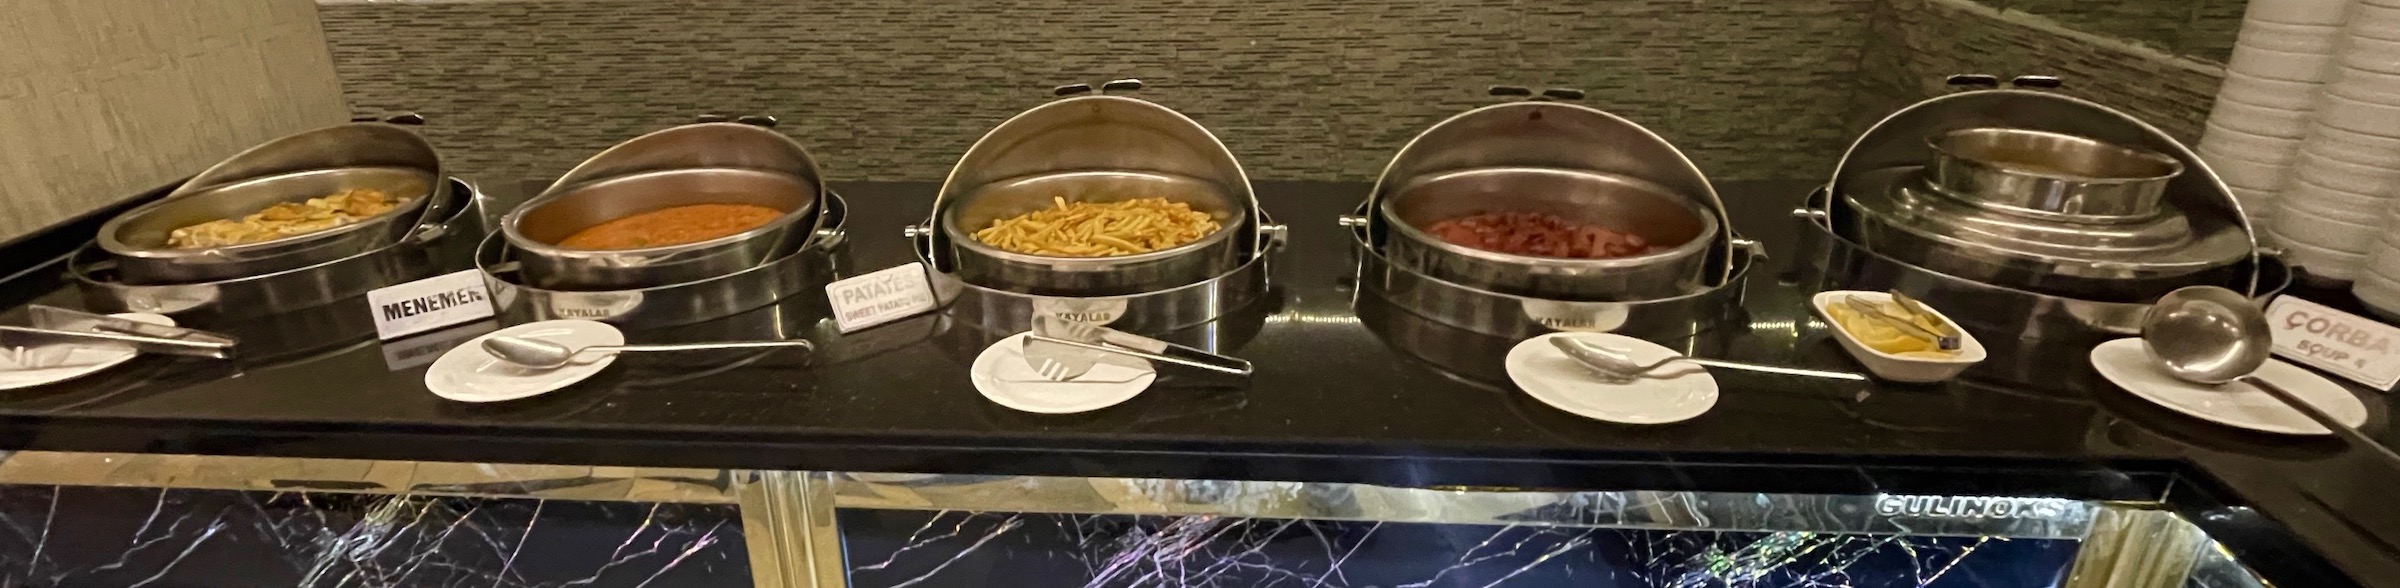 Hot Dishes, Hotel Dundar, Konya